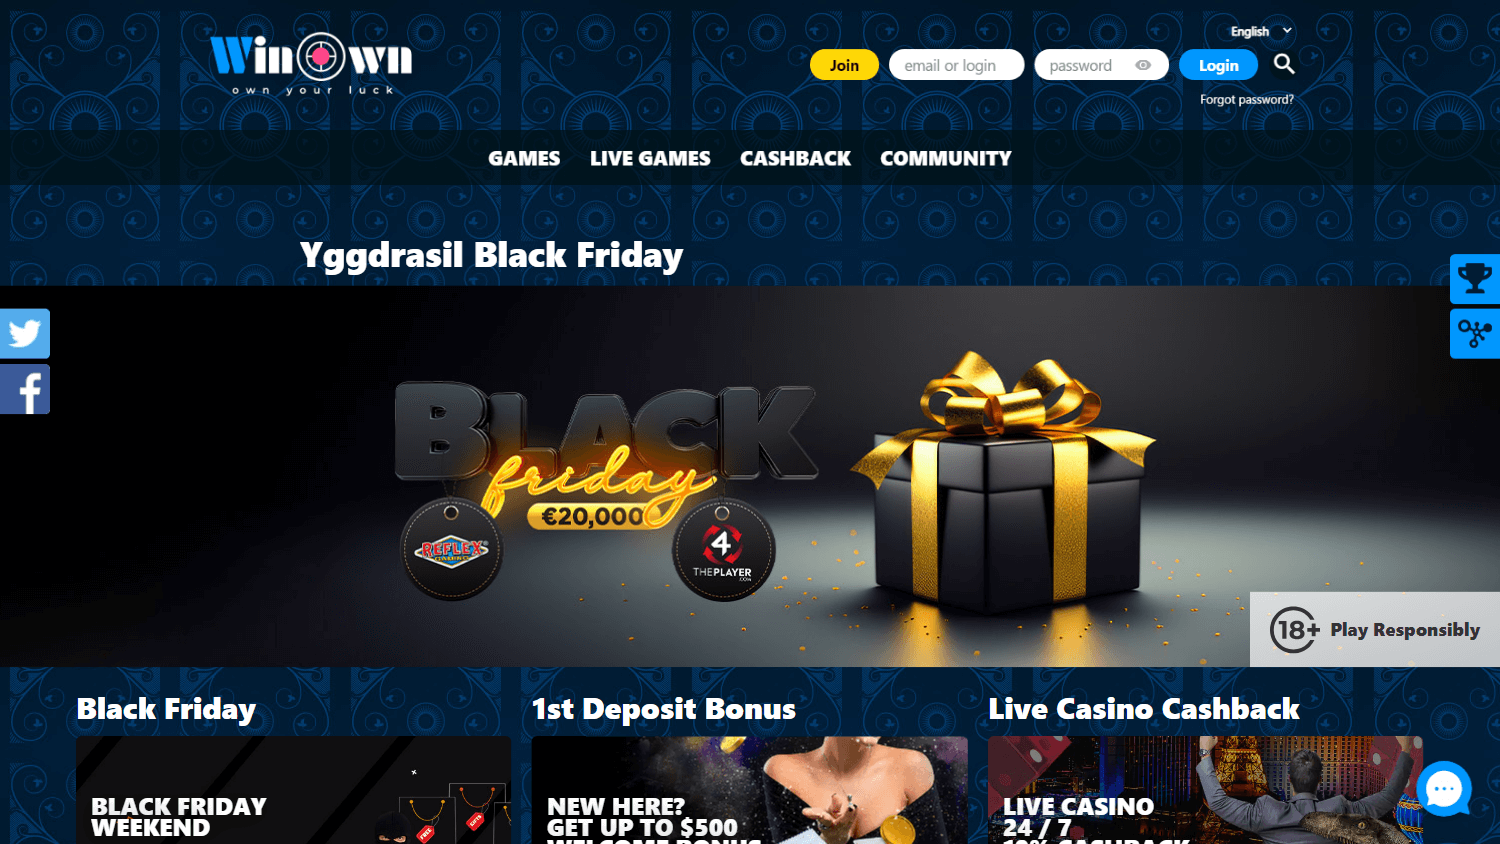 winown_casino_promotions_desktop